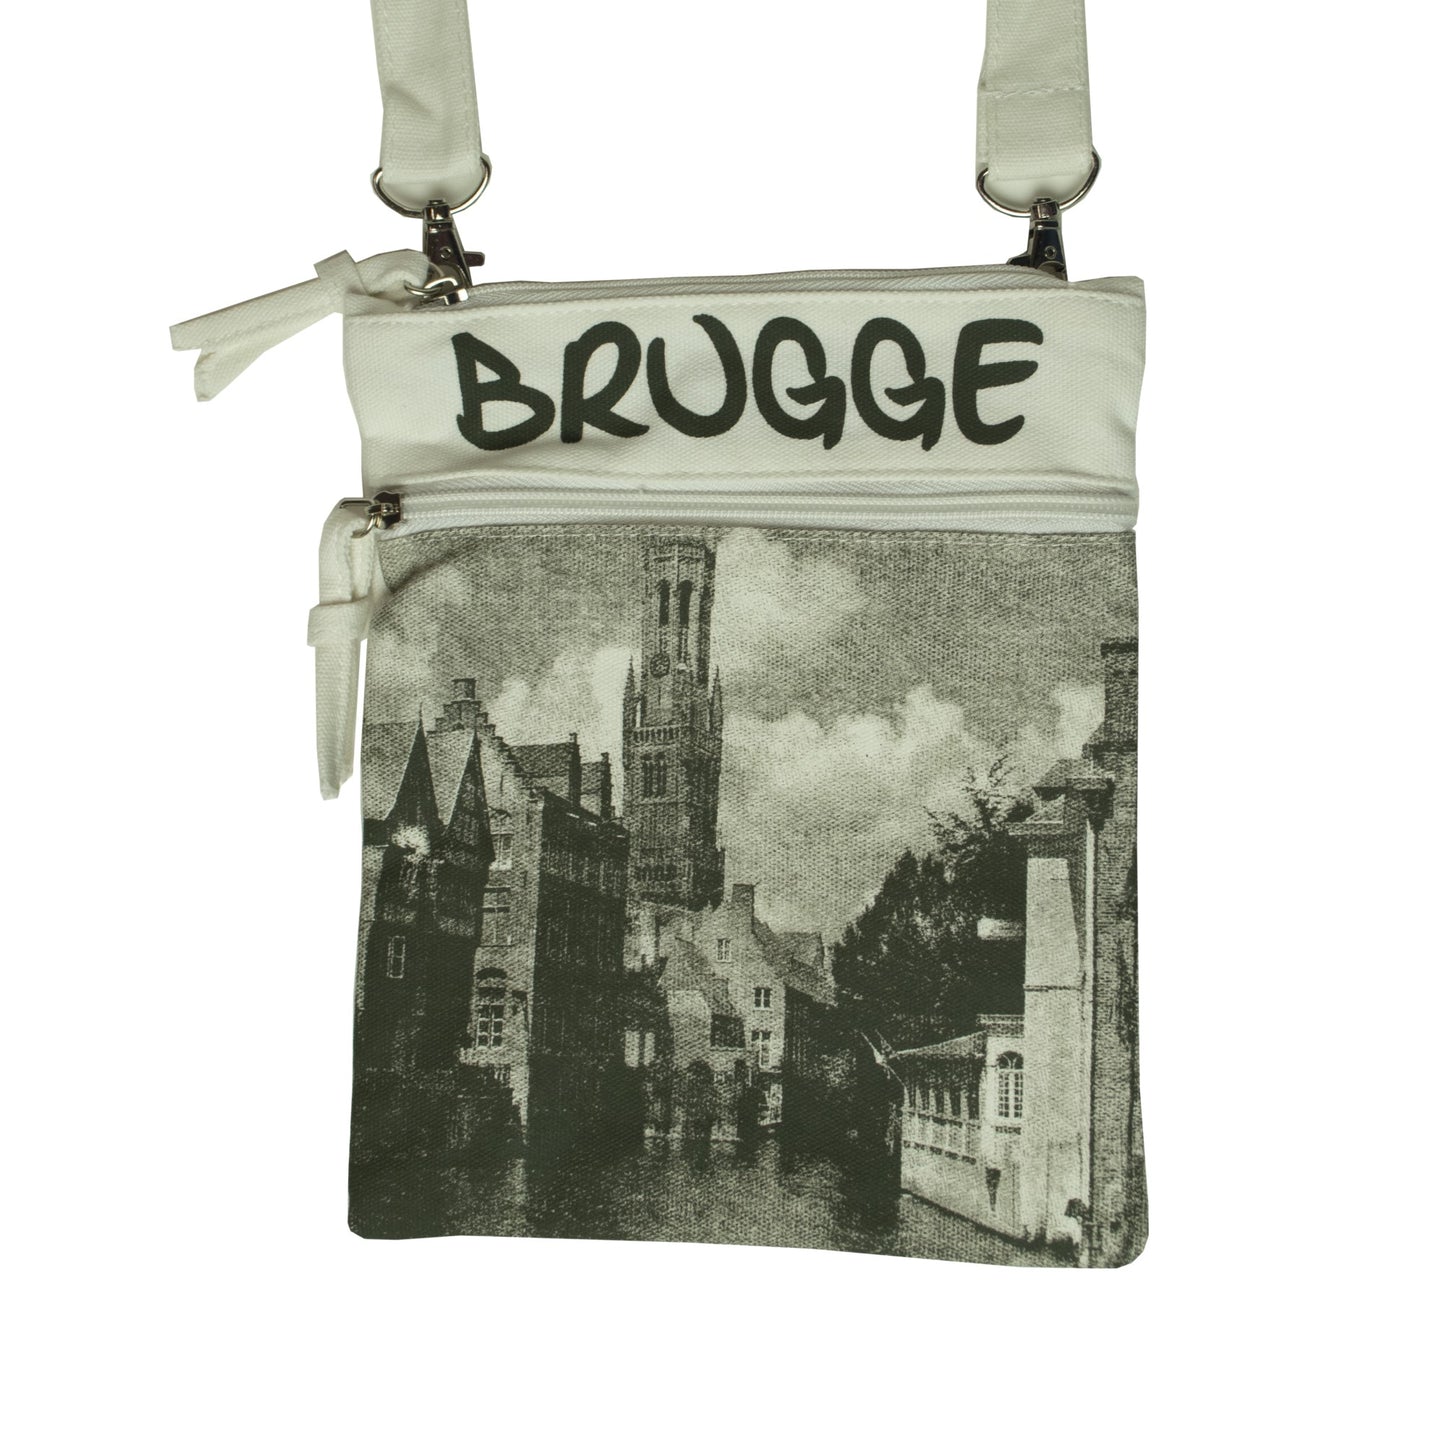 Oliver - Passport bags - Brugge